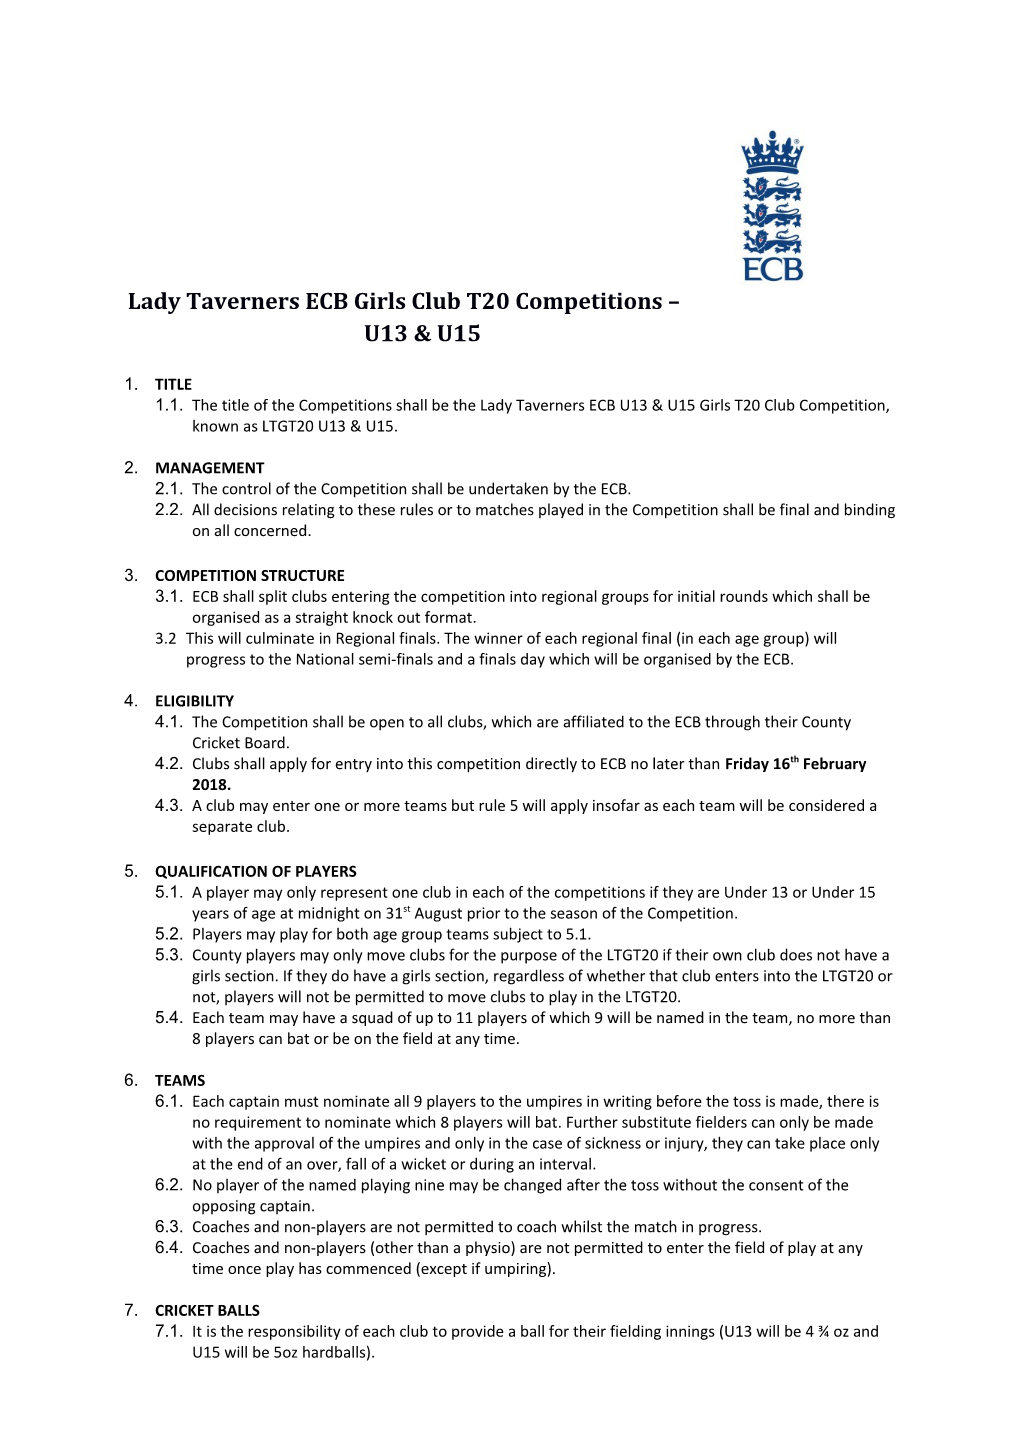 Lady Taverners ECB Girls Club T20 Competitions U13 & U15